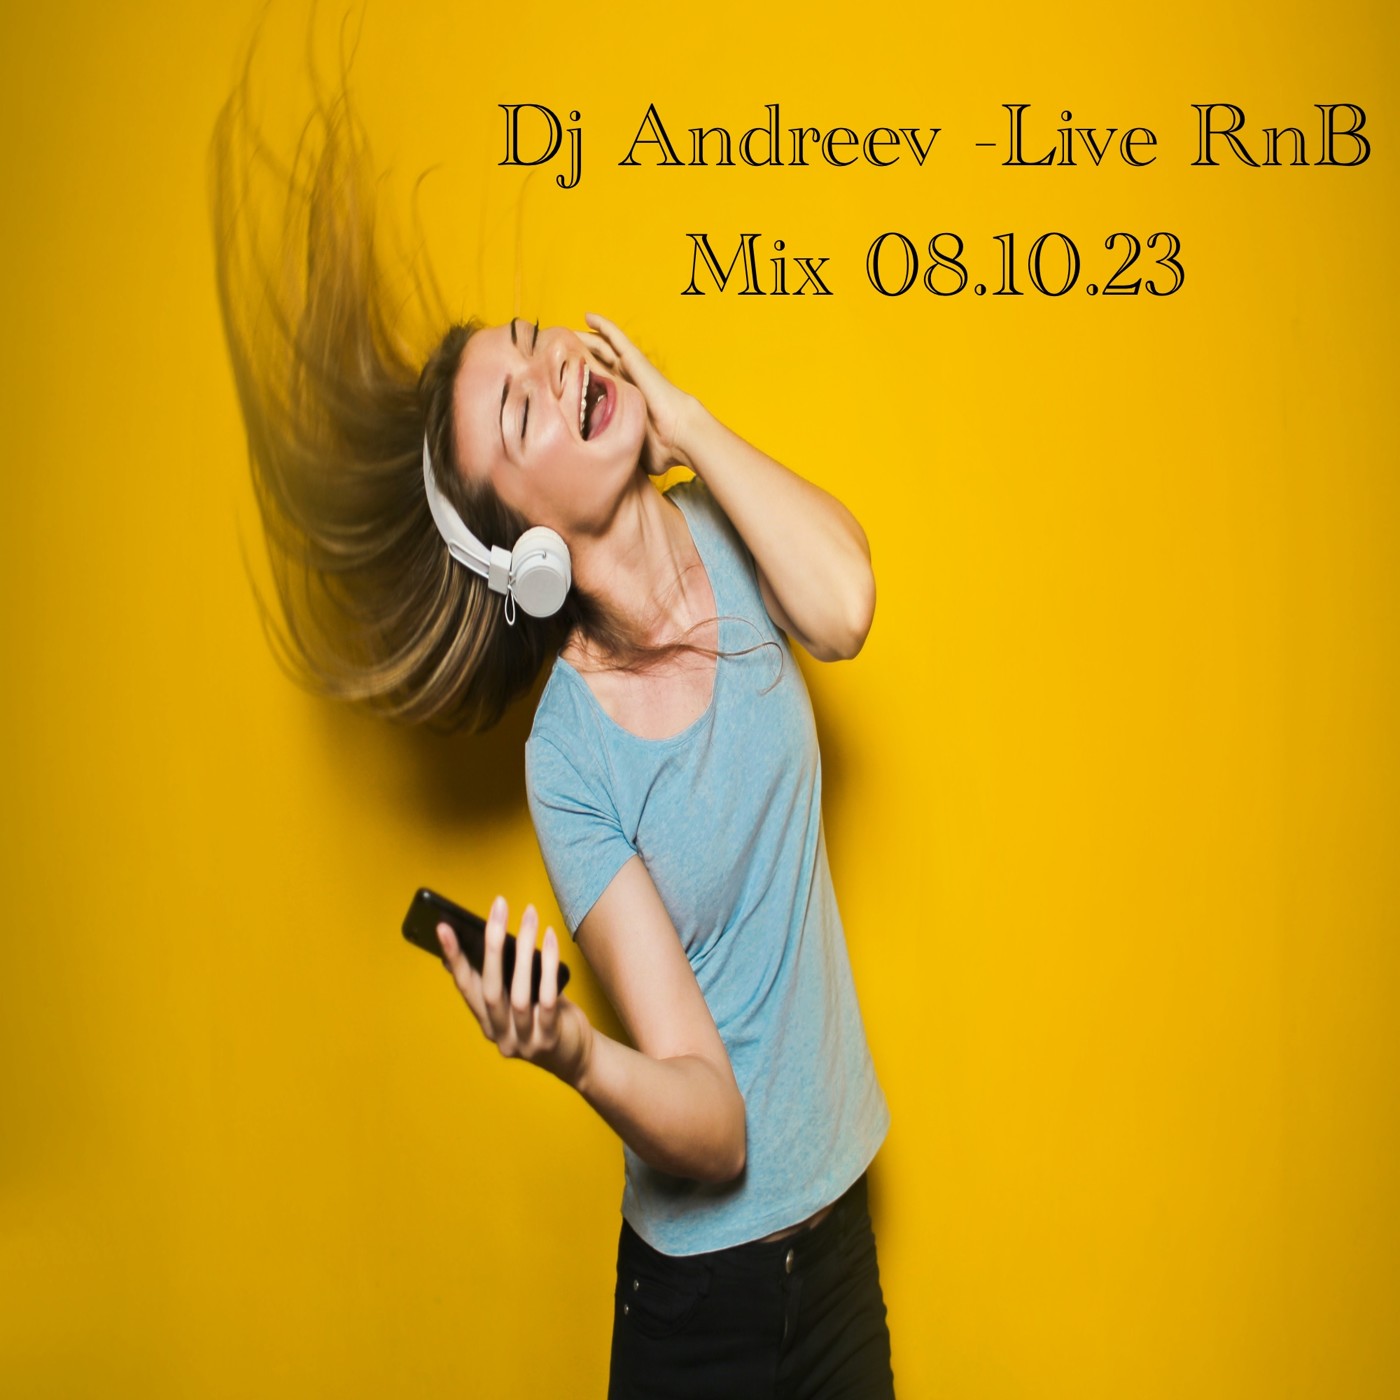 Dj Andreev - Live RnB Mix 08.10.23